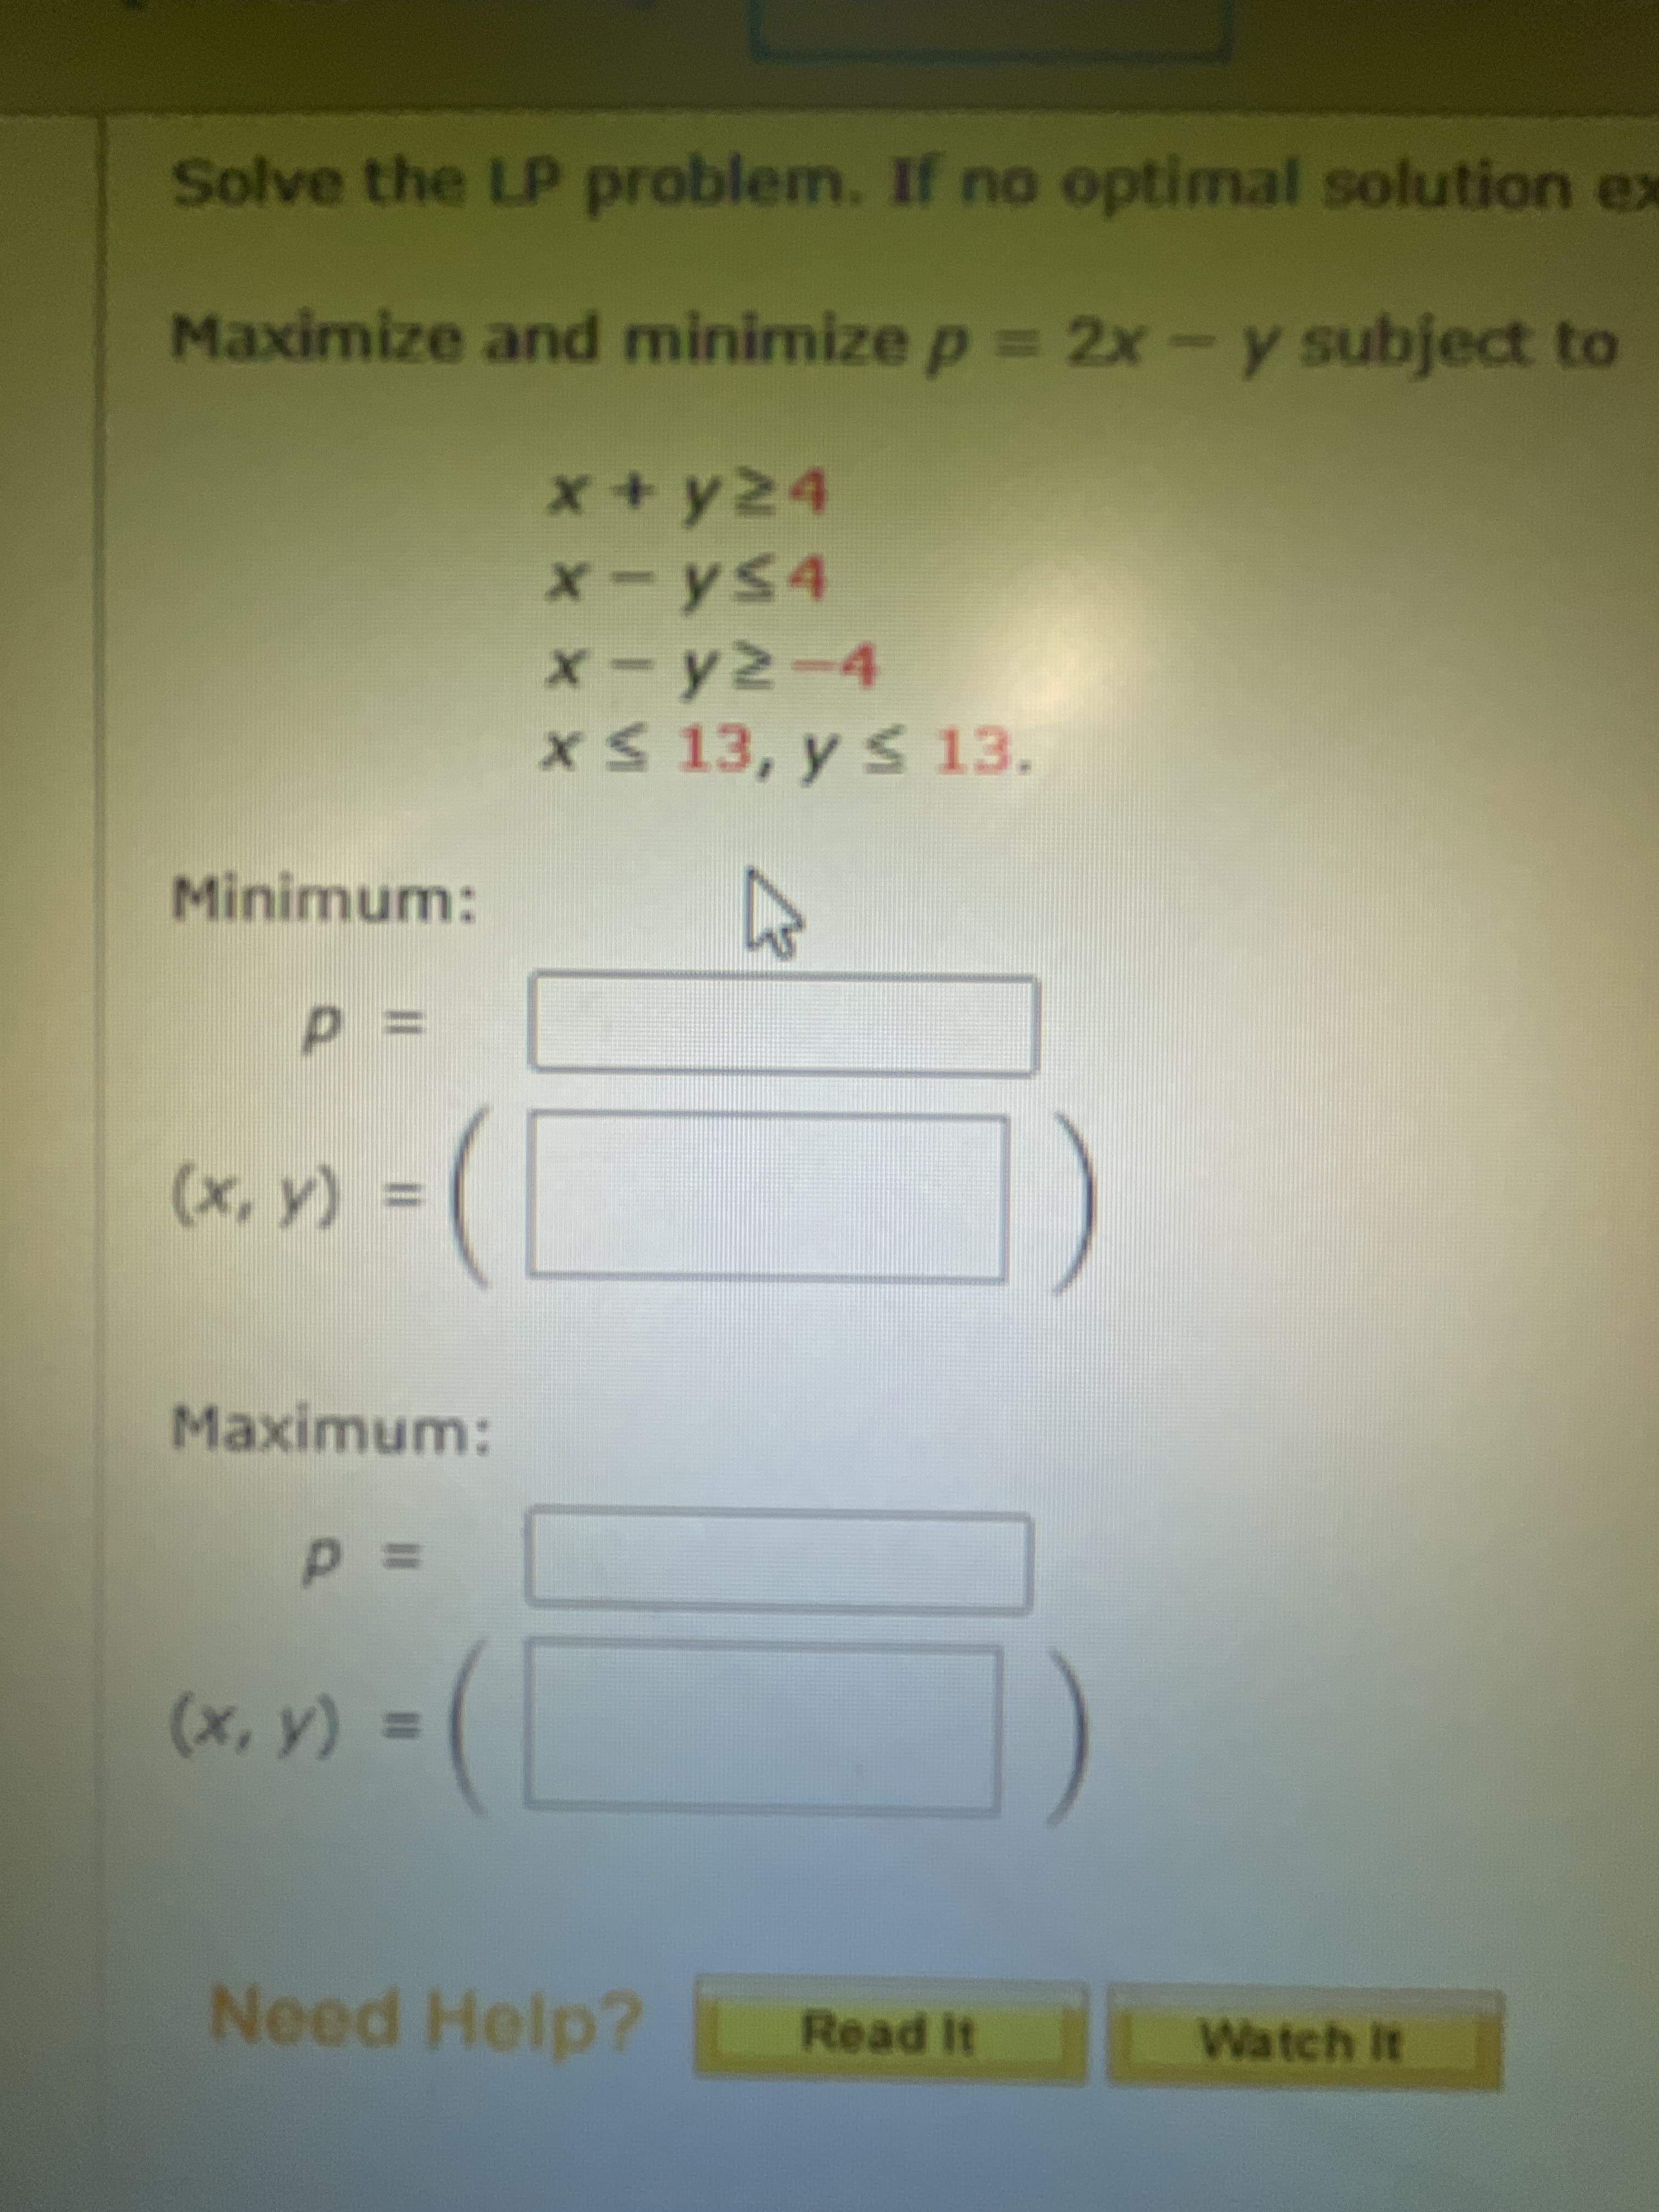 Solve the LP problem. If no optimal solution ex
Maximize and minimize p = 2x-y subject to
x+y24
x-ys4
x-y2-4
x 13, y s 13.
Minimum:
=Dd
%3D
(Ax)
Maximum:
=Dd
(Xx)
Need Help?
Read It
Watch It
